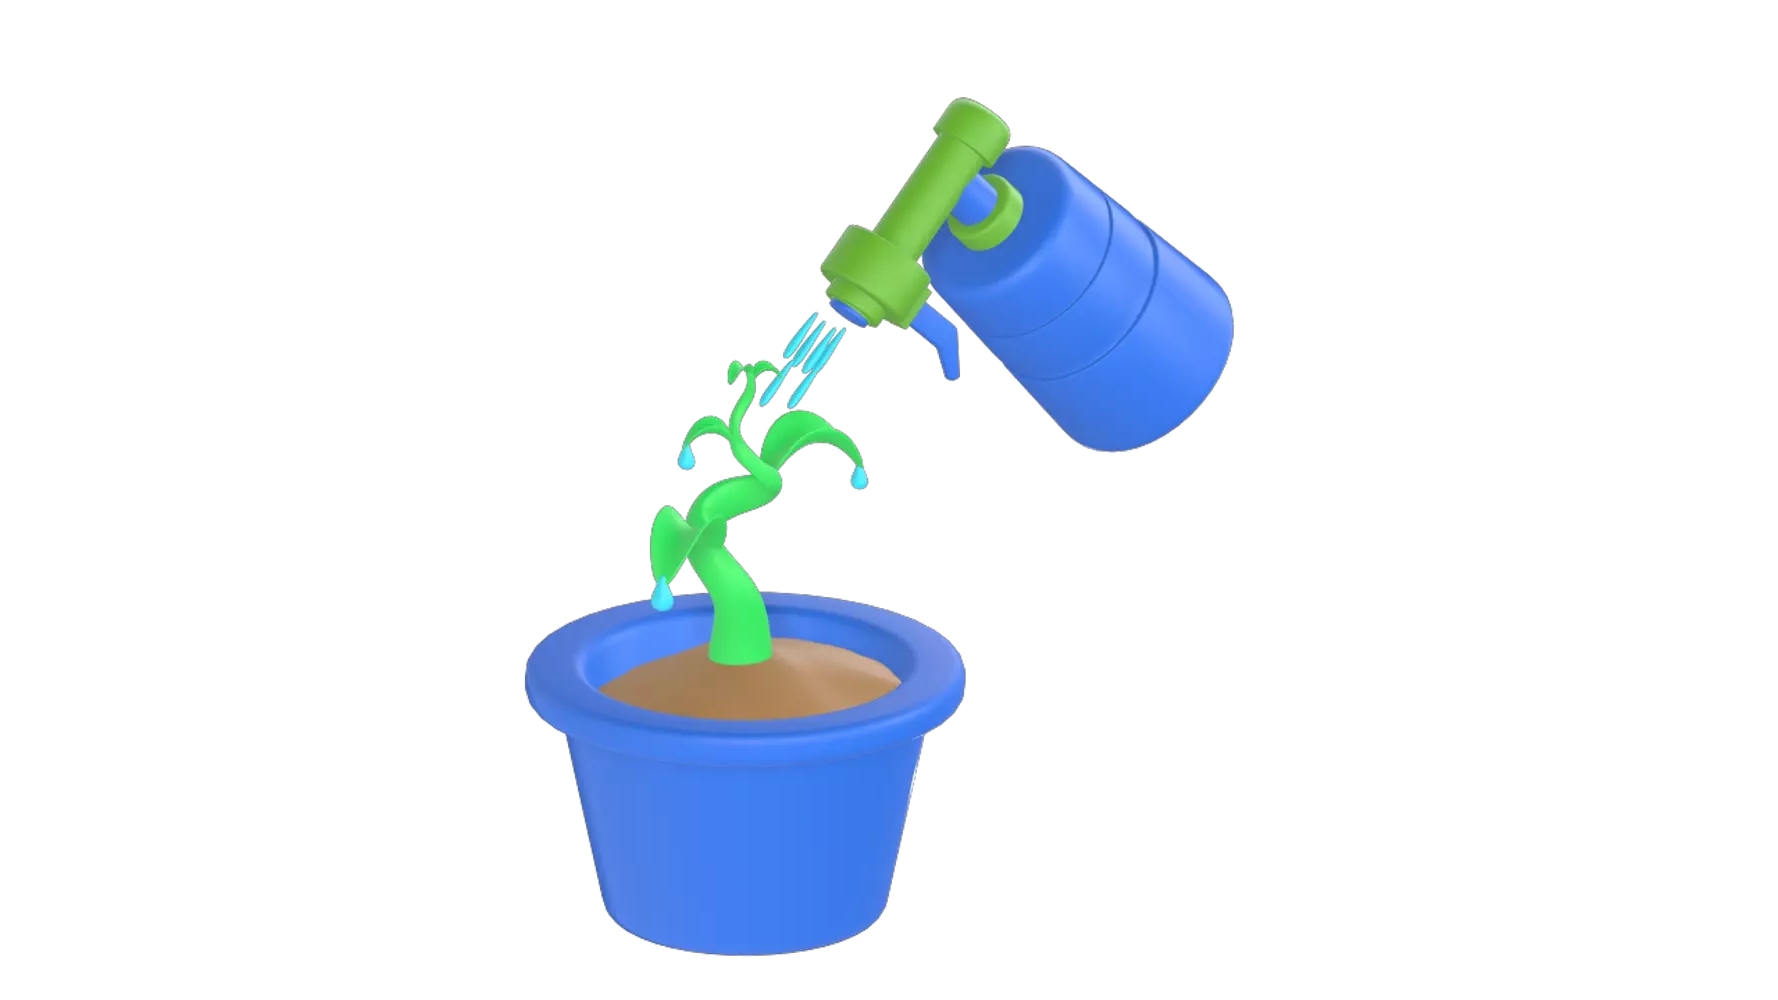 Spraying Water 3D Graphic